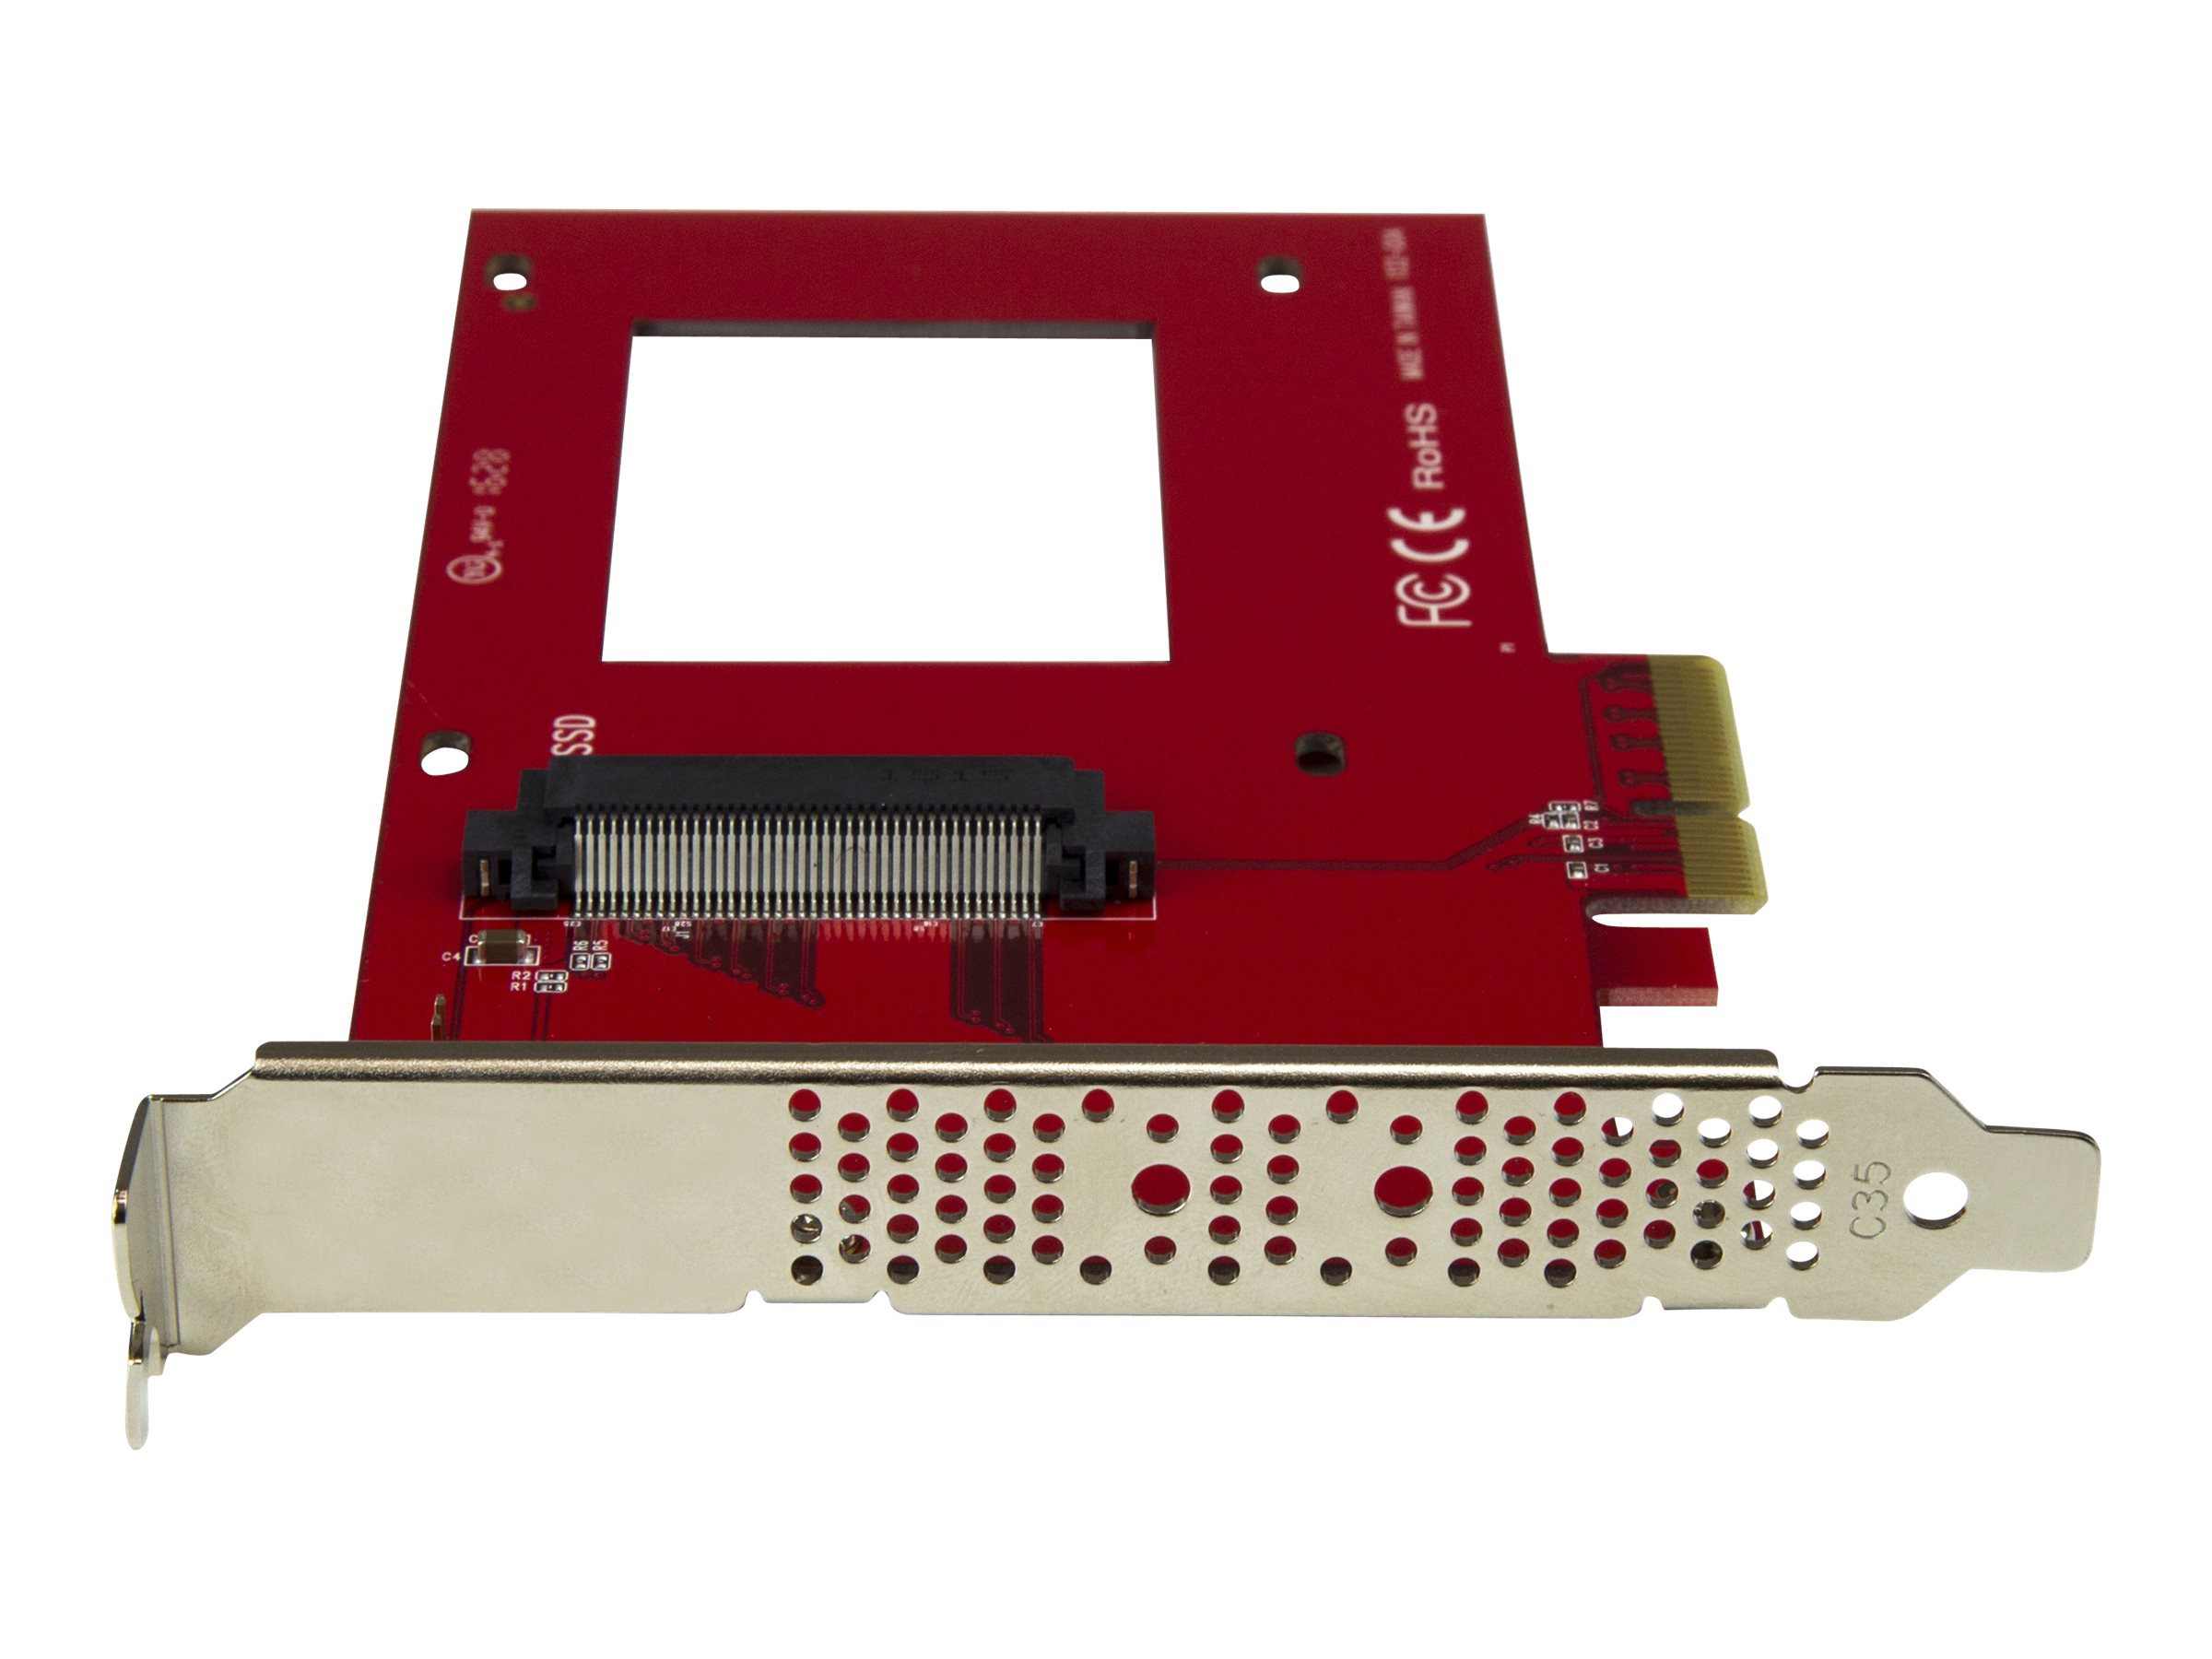 StarTech.com U.2 auf PCIe Adapter für 2,5" U.2 NVMe SSD - SFF 8639 - 4x PCI Express 3.0 - NVMe PCIe Adapter - U.2 PCIe Karte - Schnittstellenadapter - 2.5" (6.4 cm)